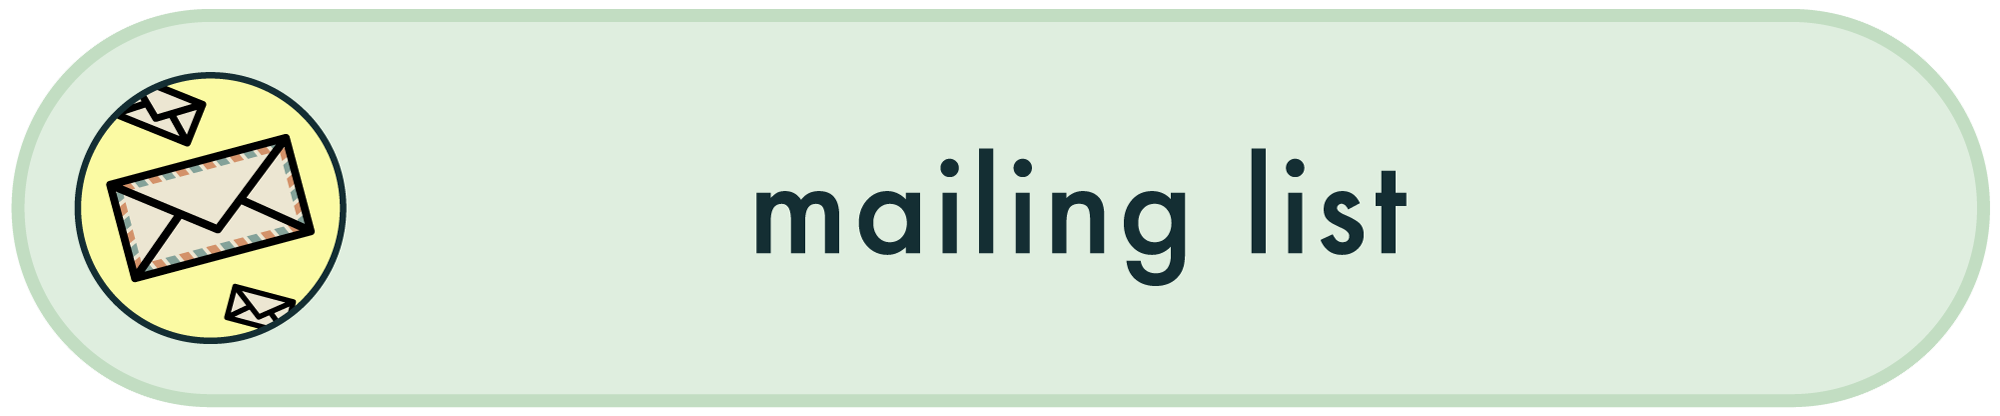 Mailing List Button